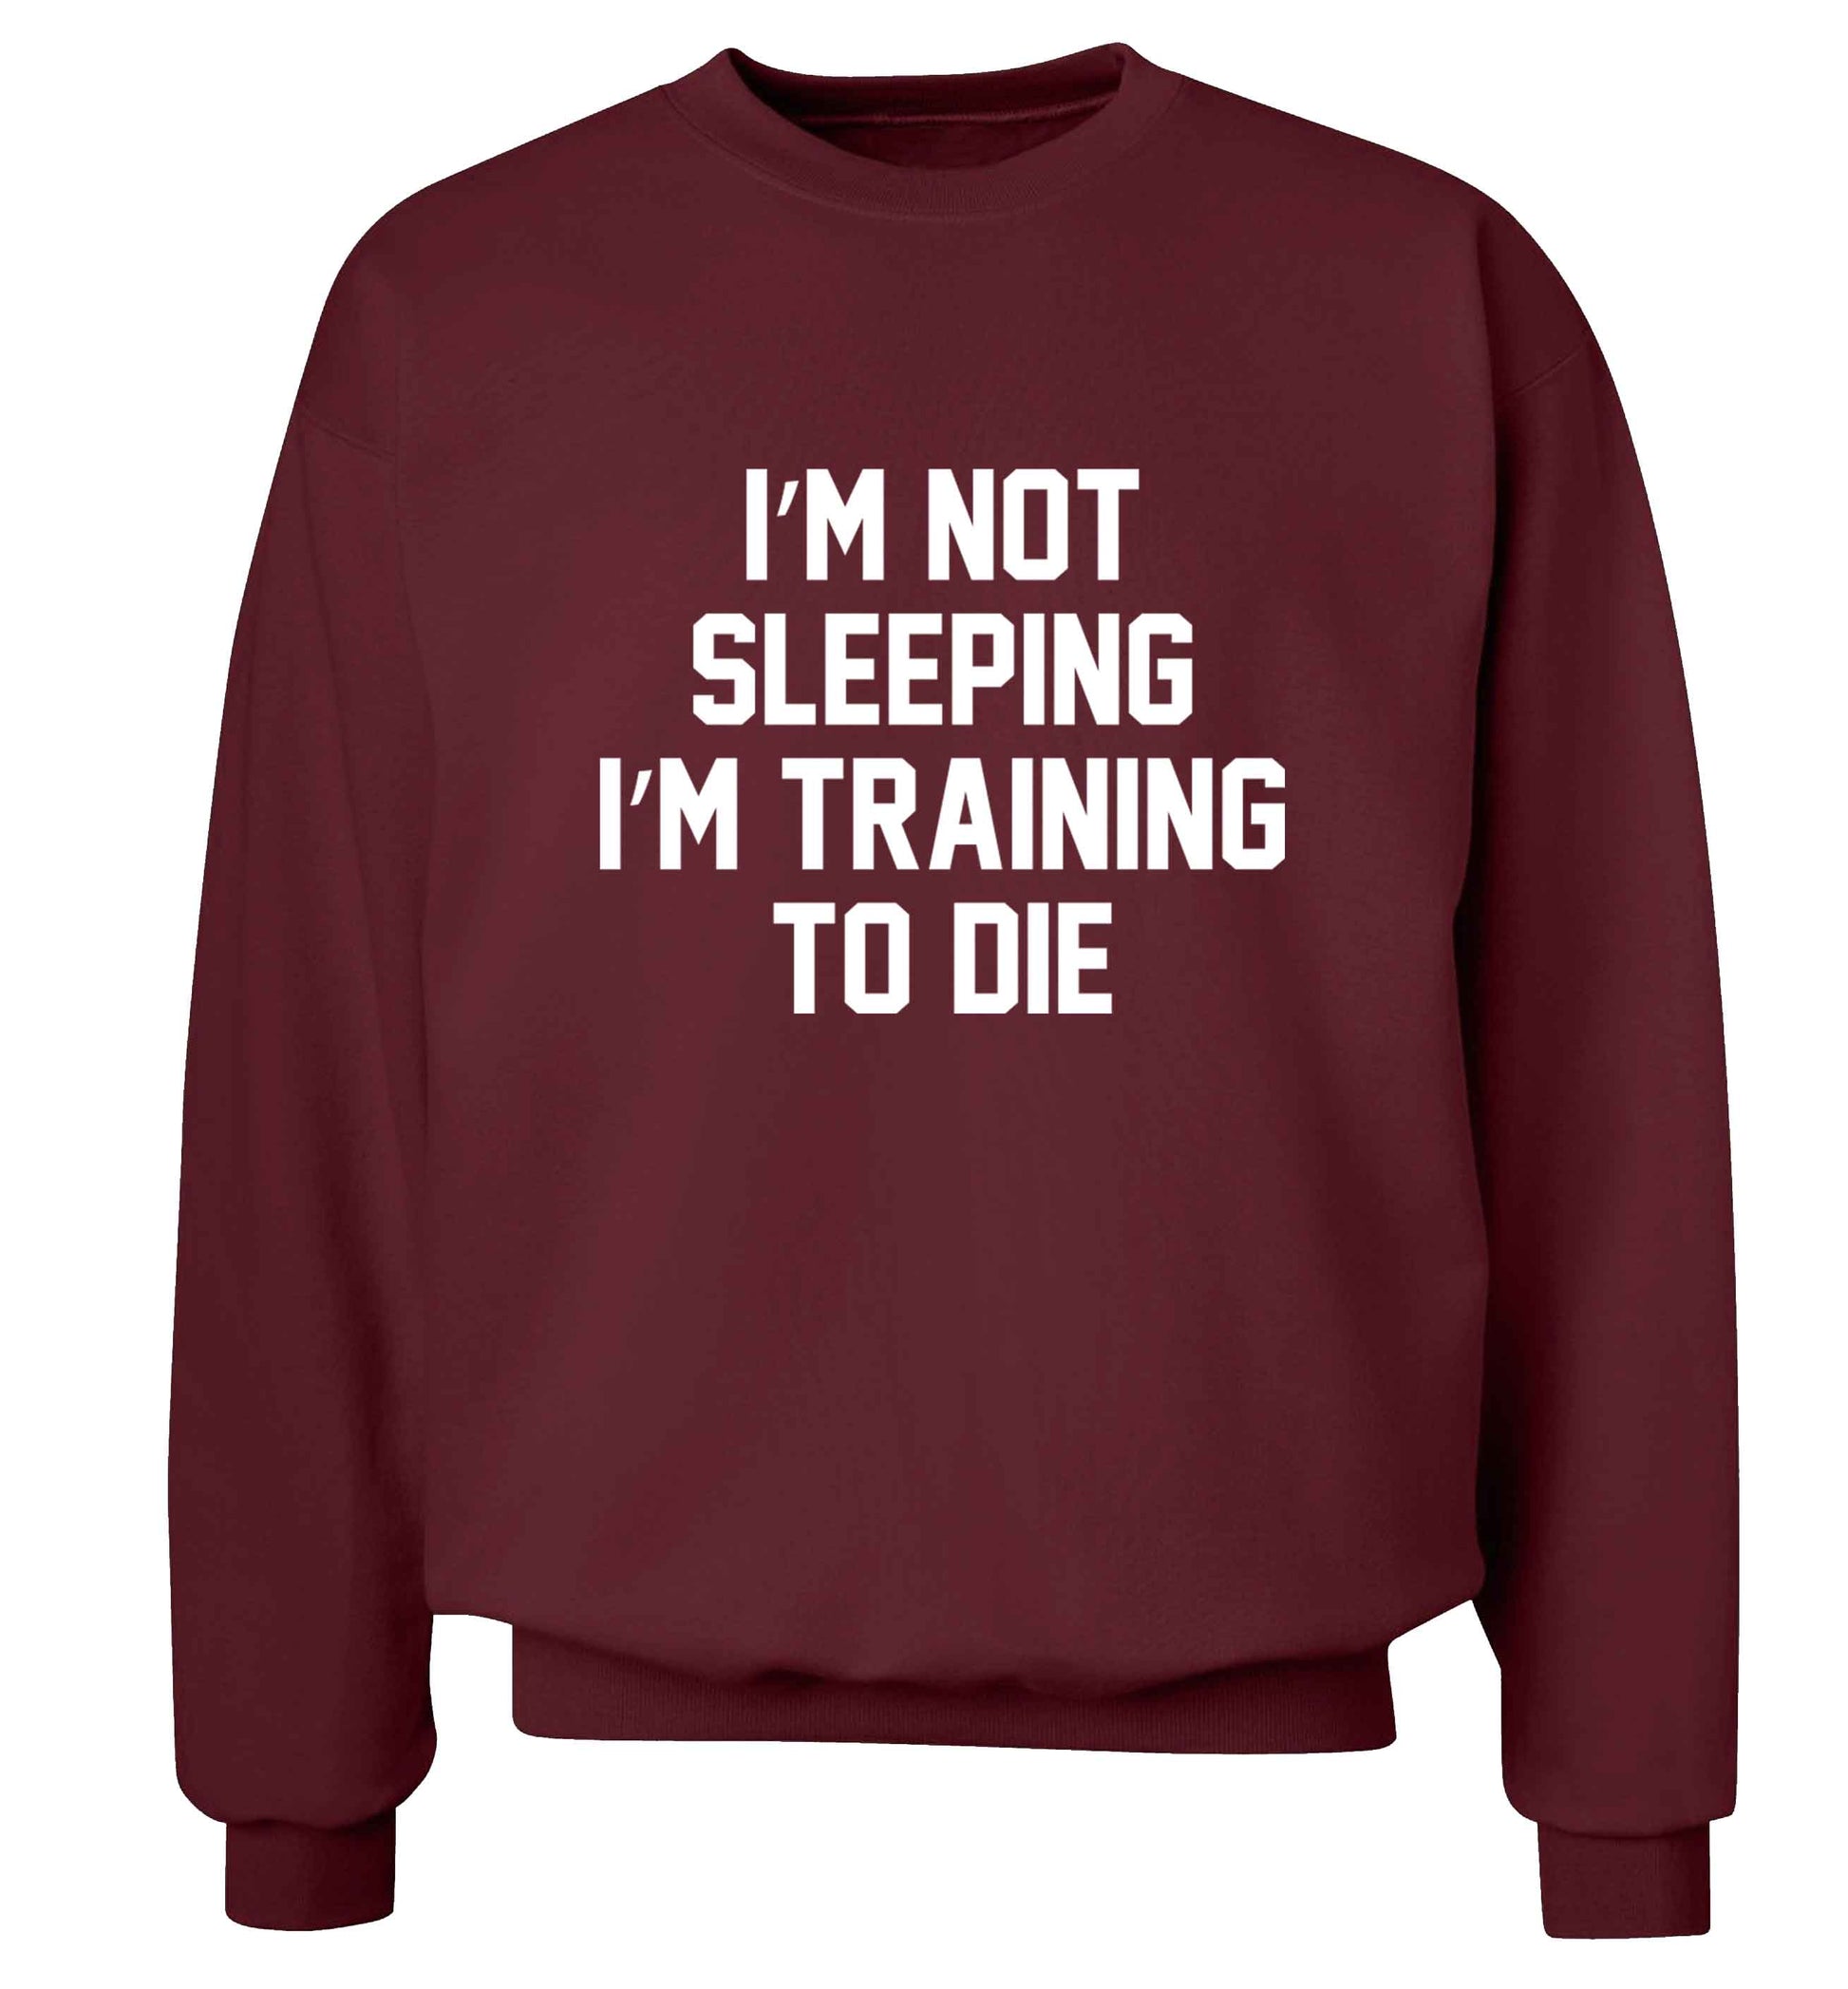 I'm not sleeping I'm training to die adult's unisex maroon sweater 2XL